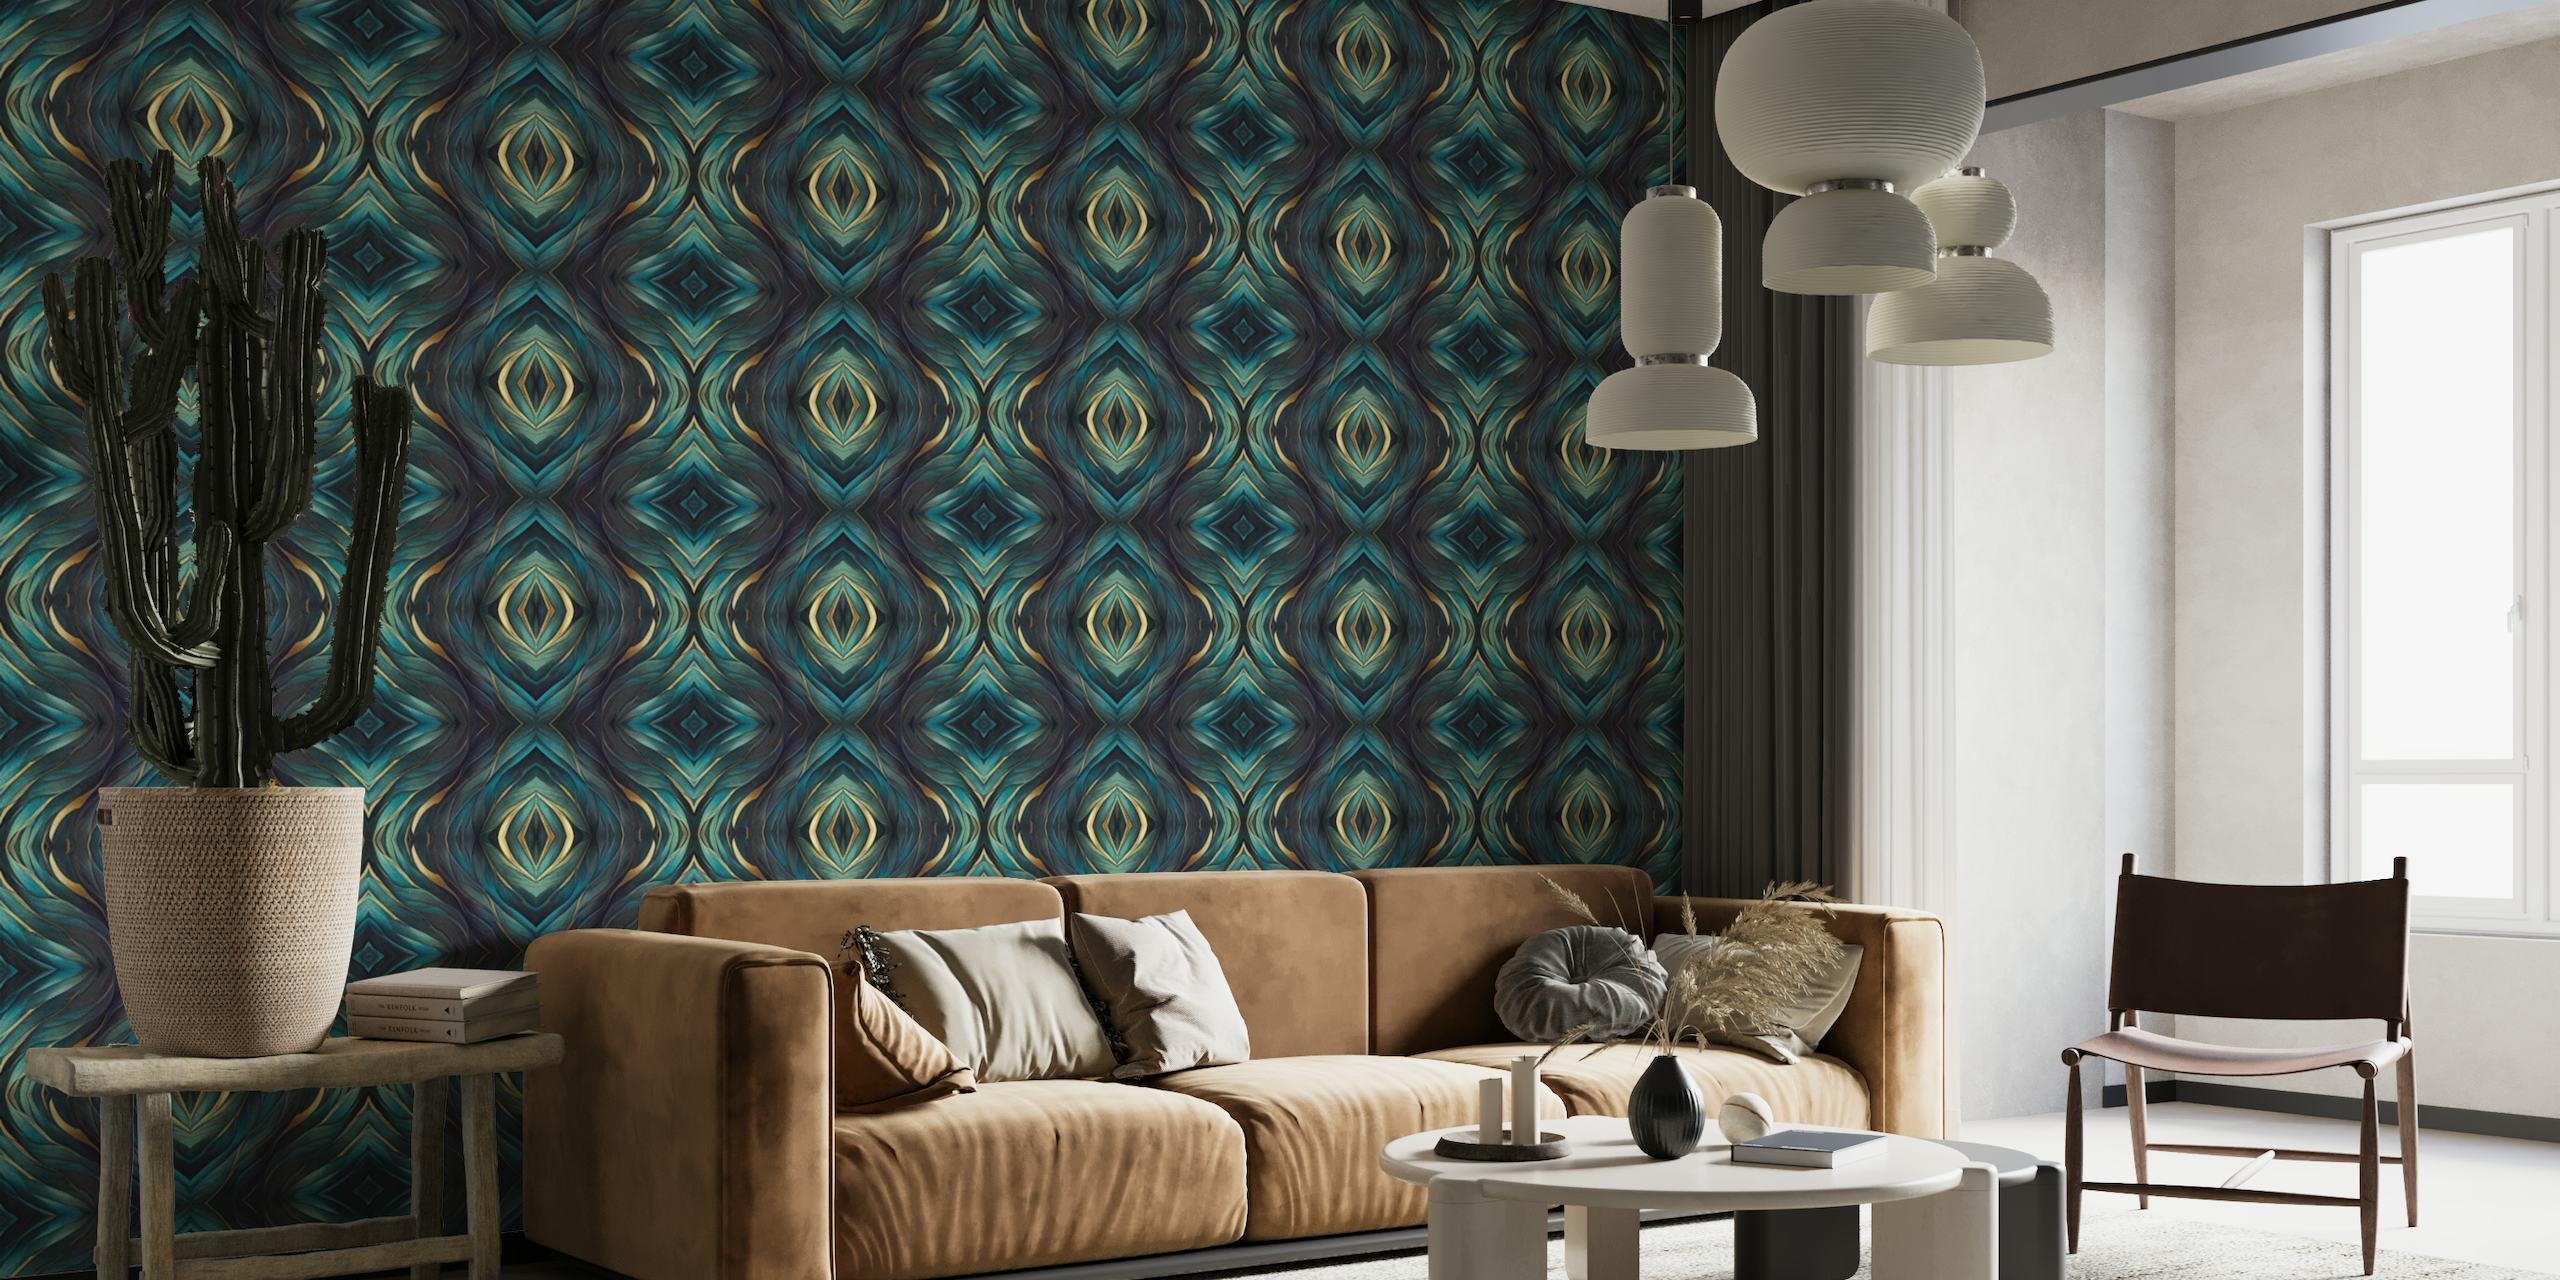 Artisanal Mediterranean Tile Design Teal Blue Gold behang